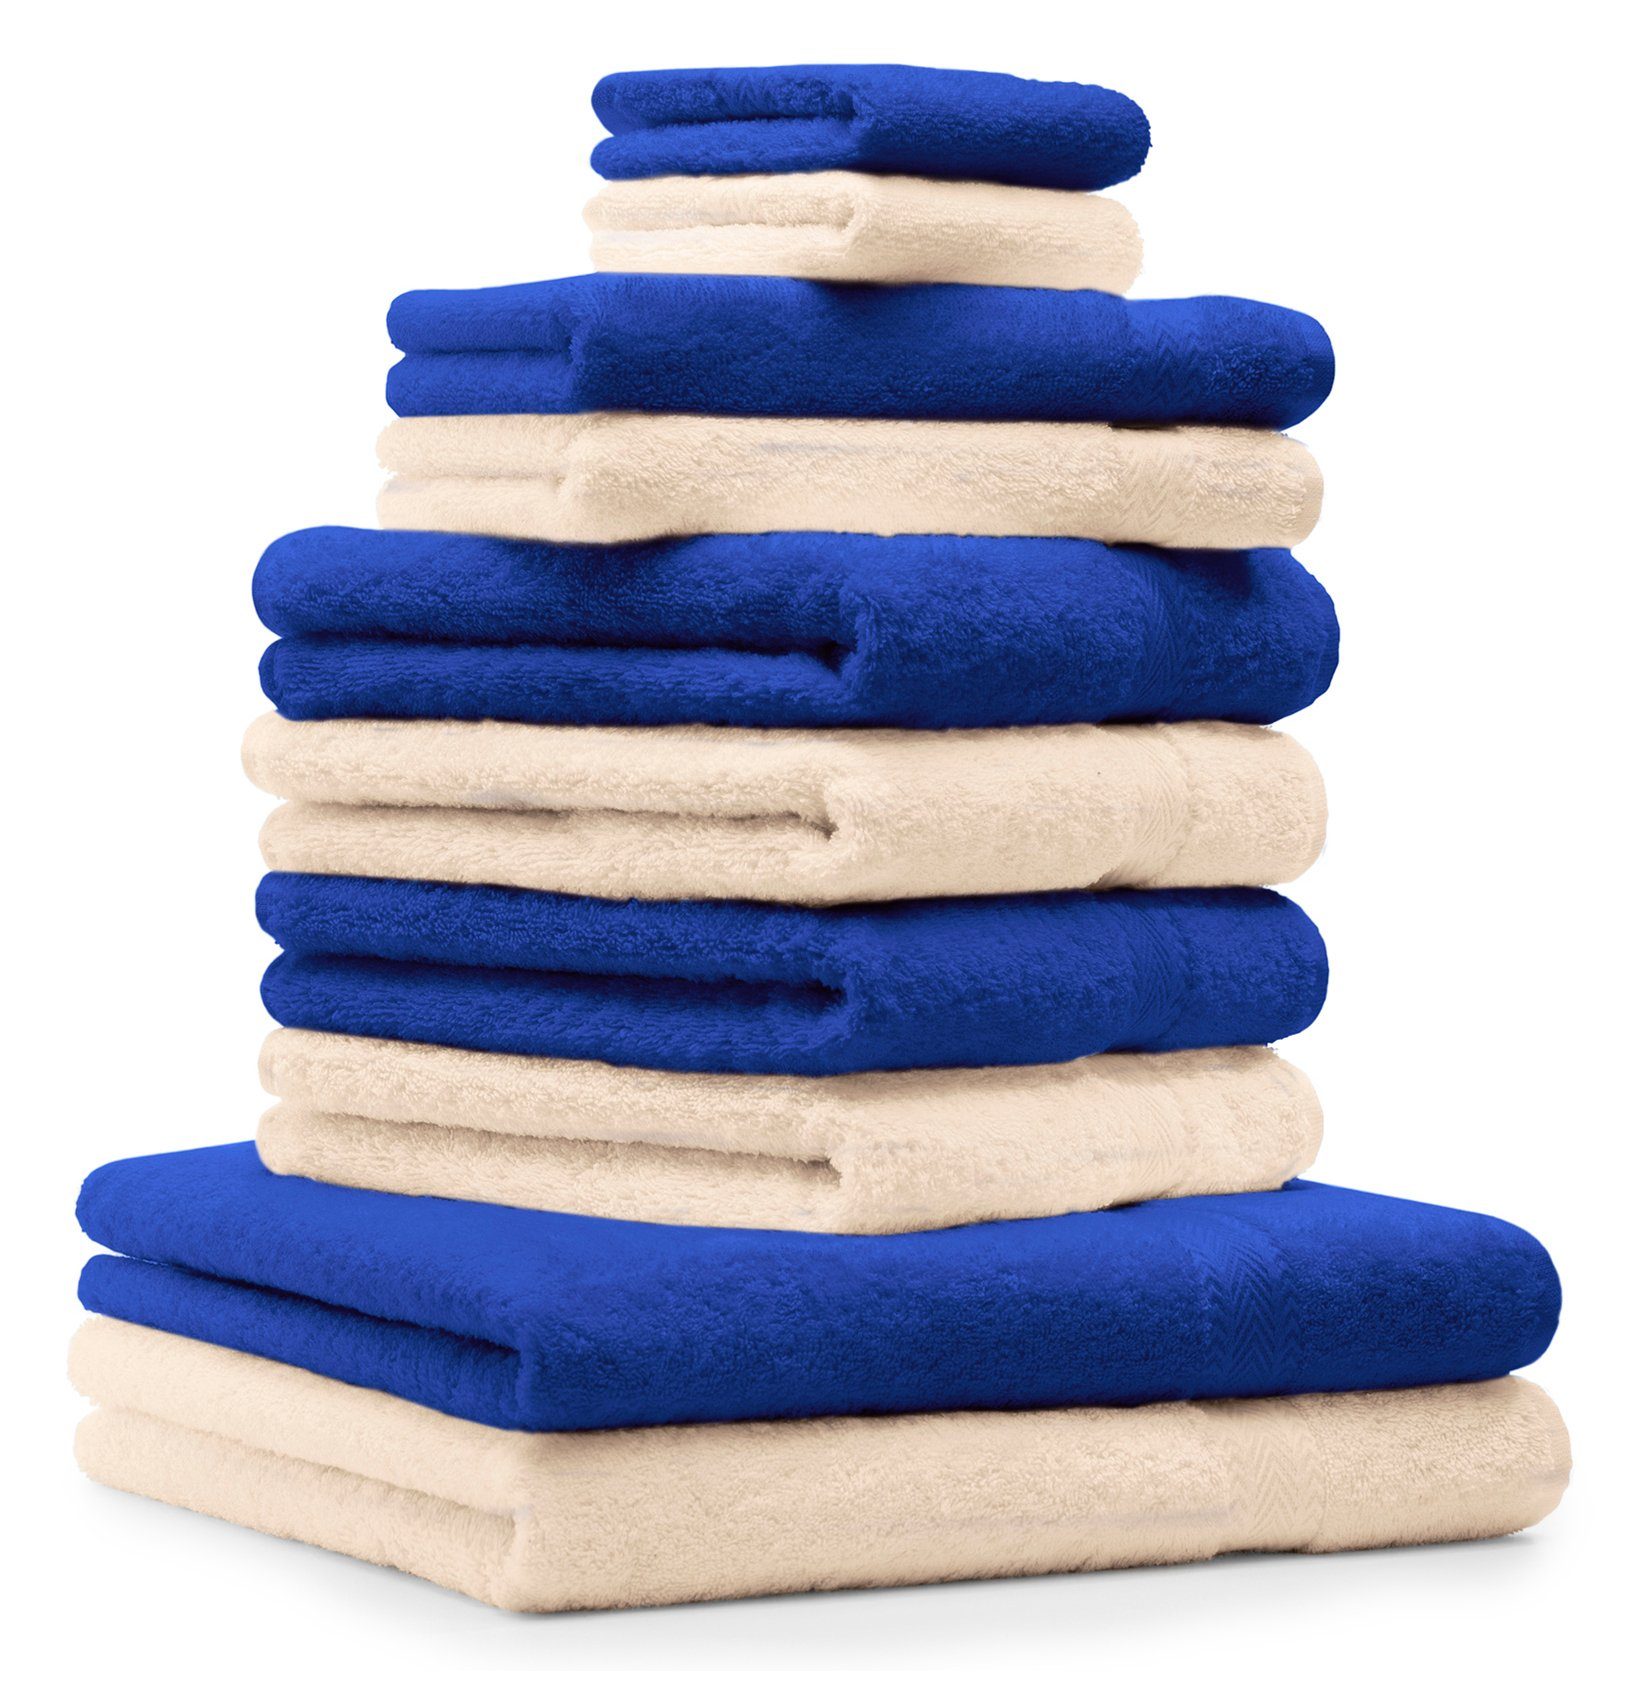 Betz Handtuch Set 10-TLG. Handtuch-Set Premium 100% Baumwolle 2 Duschtücher 4 Handtücher 2 Gästetücher 2 Waschhandschuhe Farbe Royal Blau & Beige, 100% Baumwolle, (10-tlg)